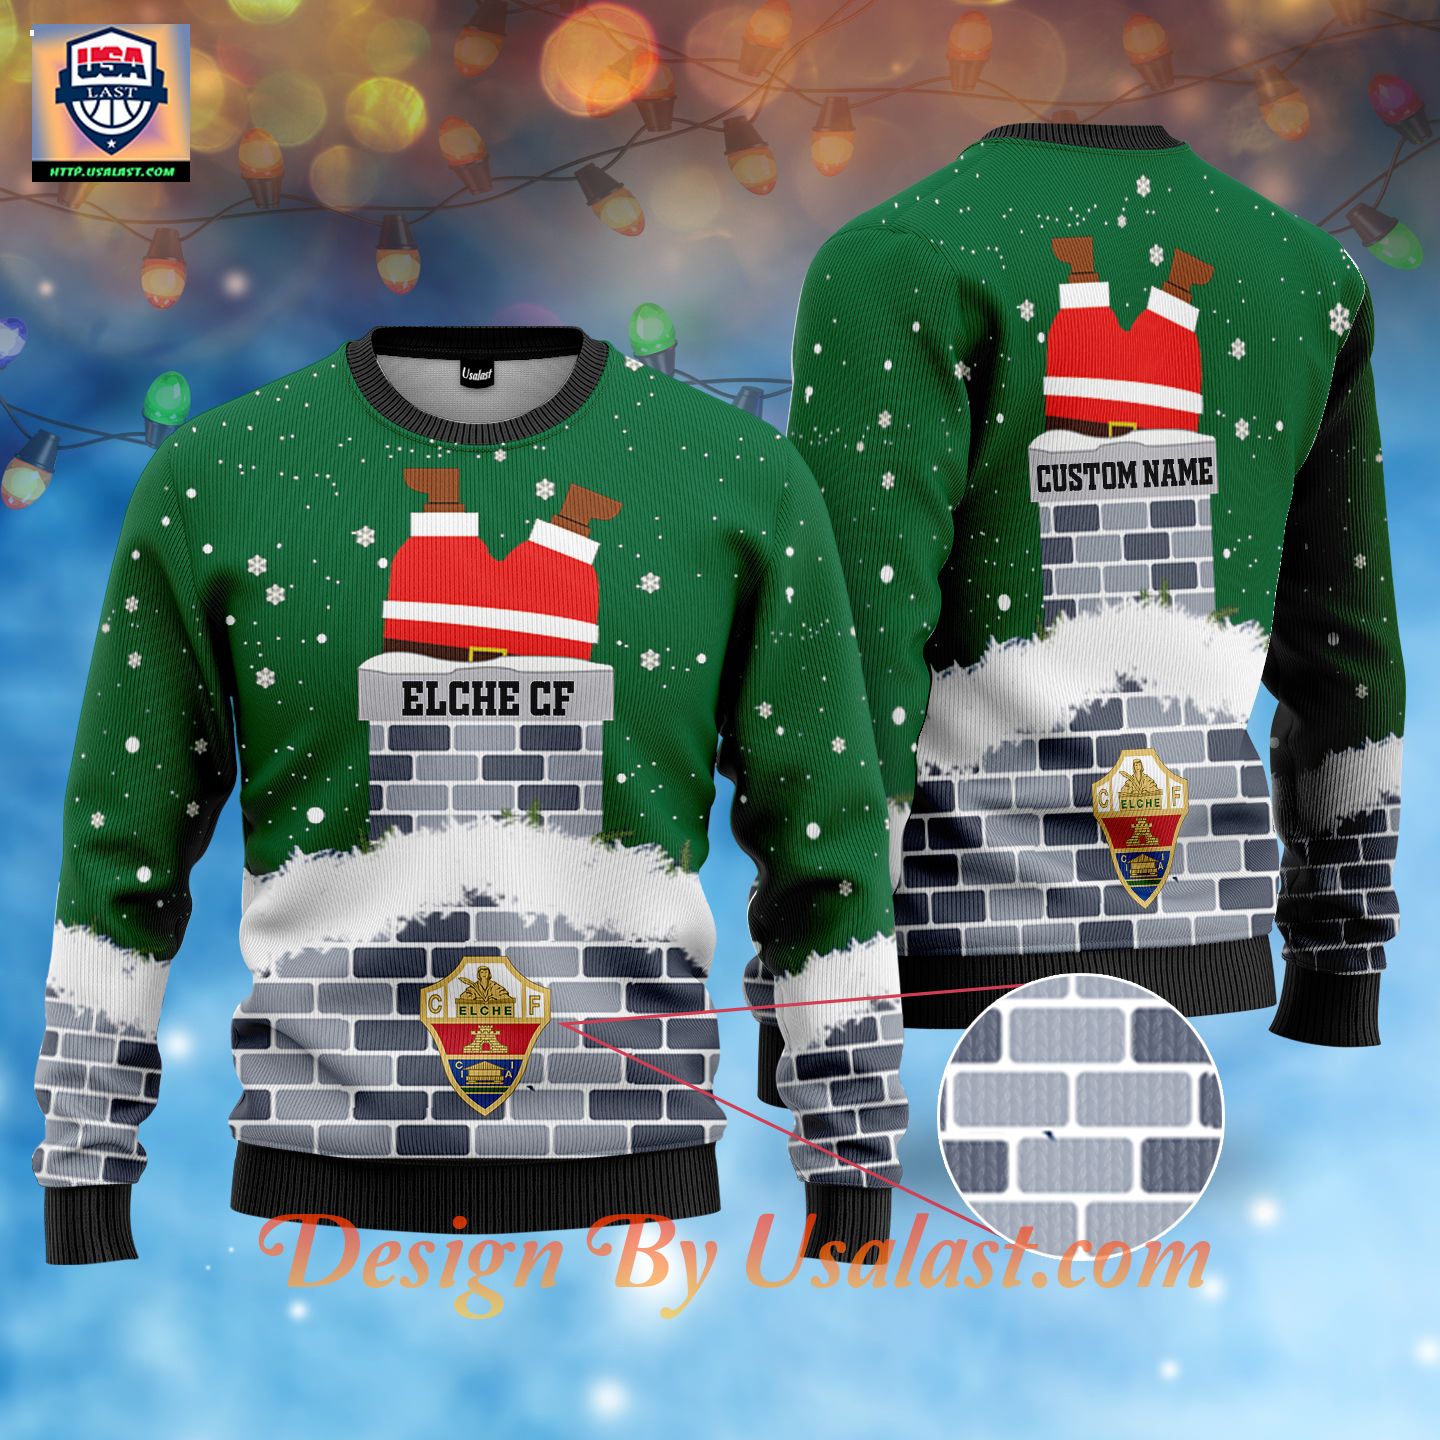 elche-cf-santa-claus-custom-name-ugly-christmas-sweater-1-nWFUV.jpg